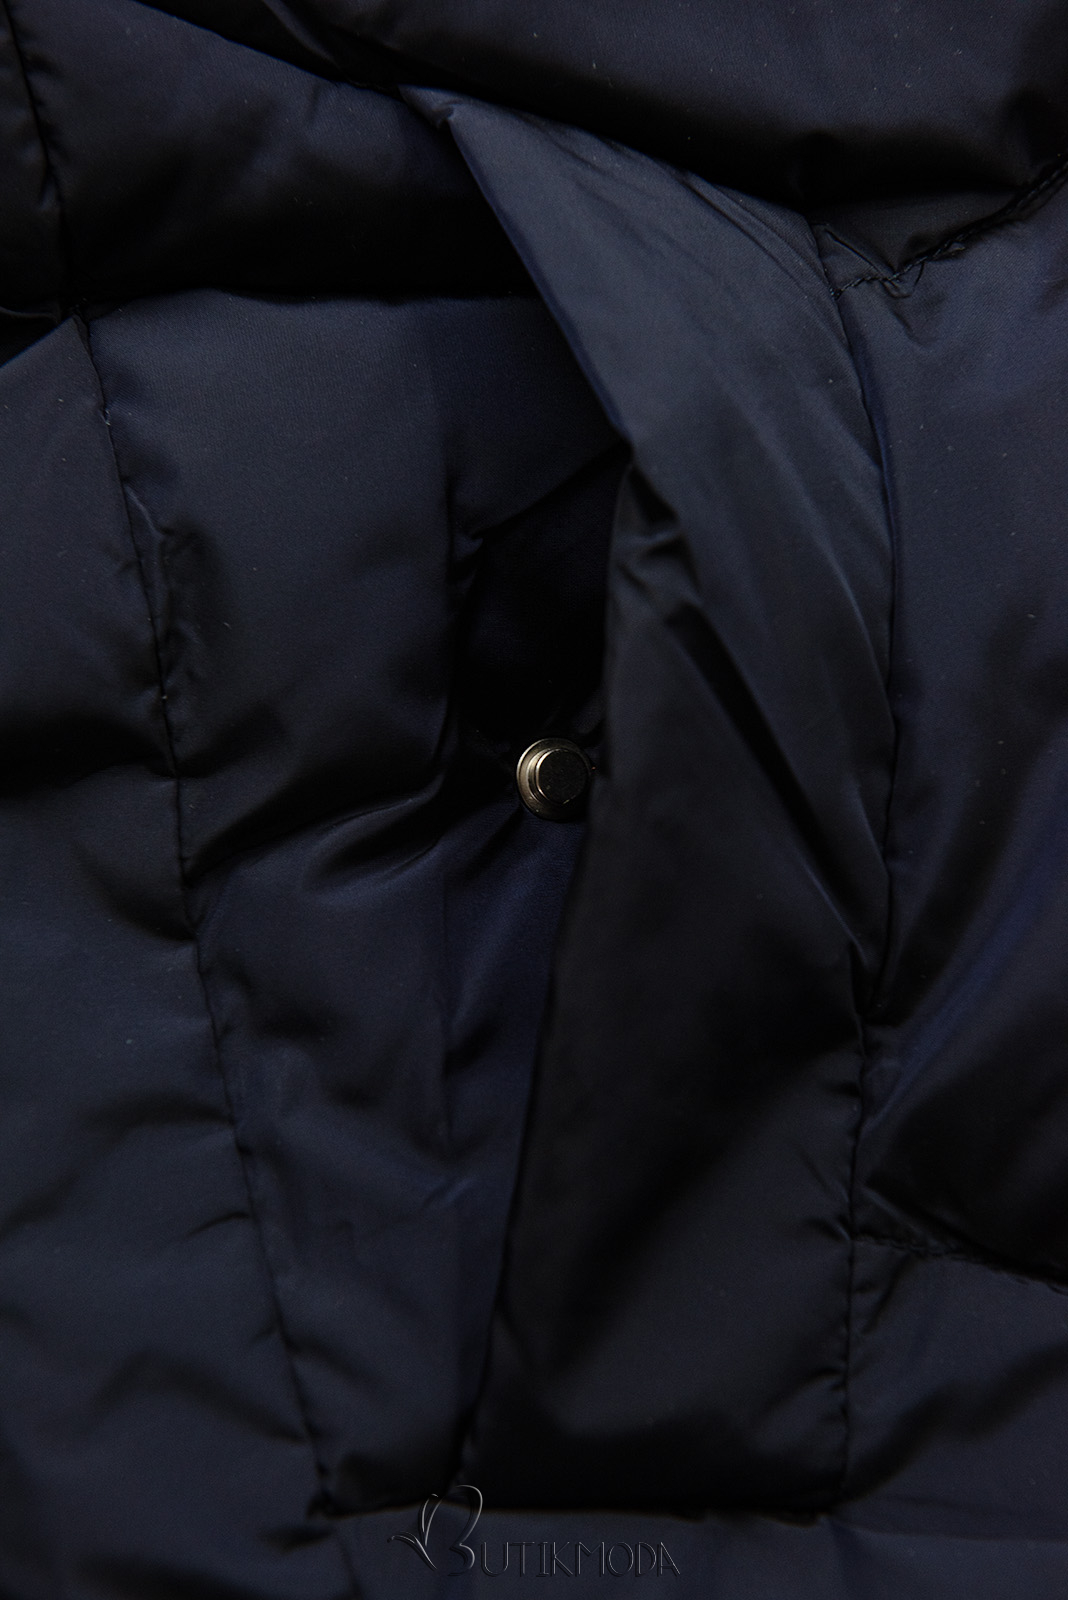 Dark blue winter bomber jacket in an elongated cut